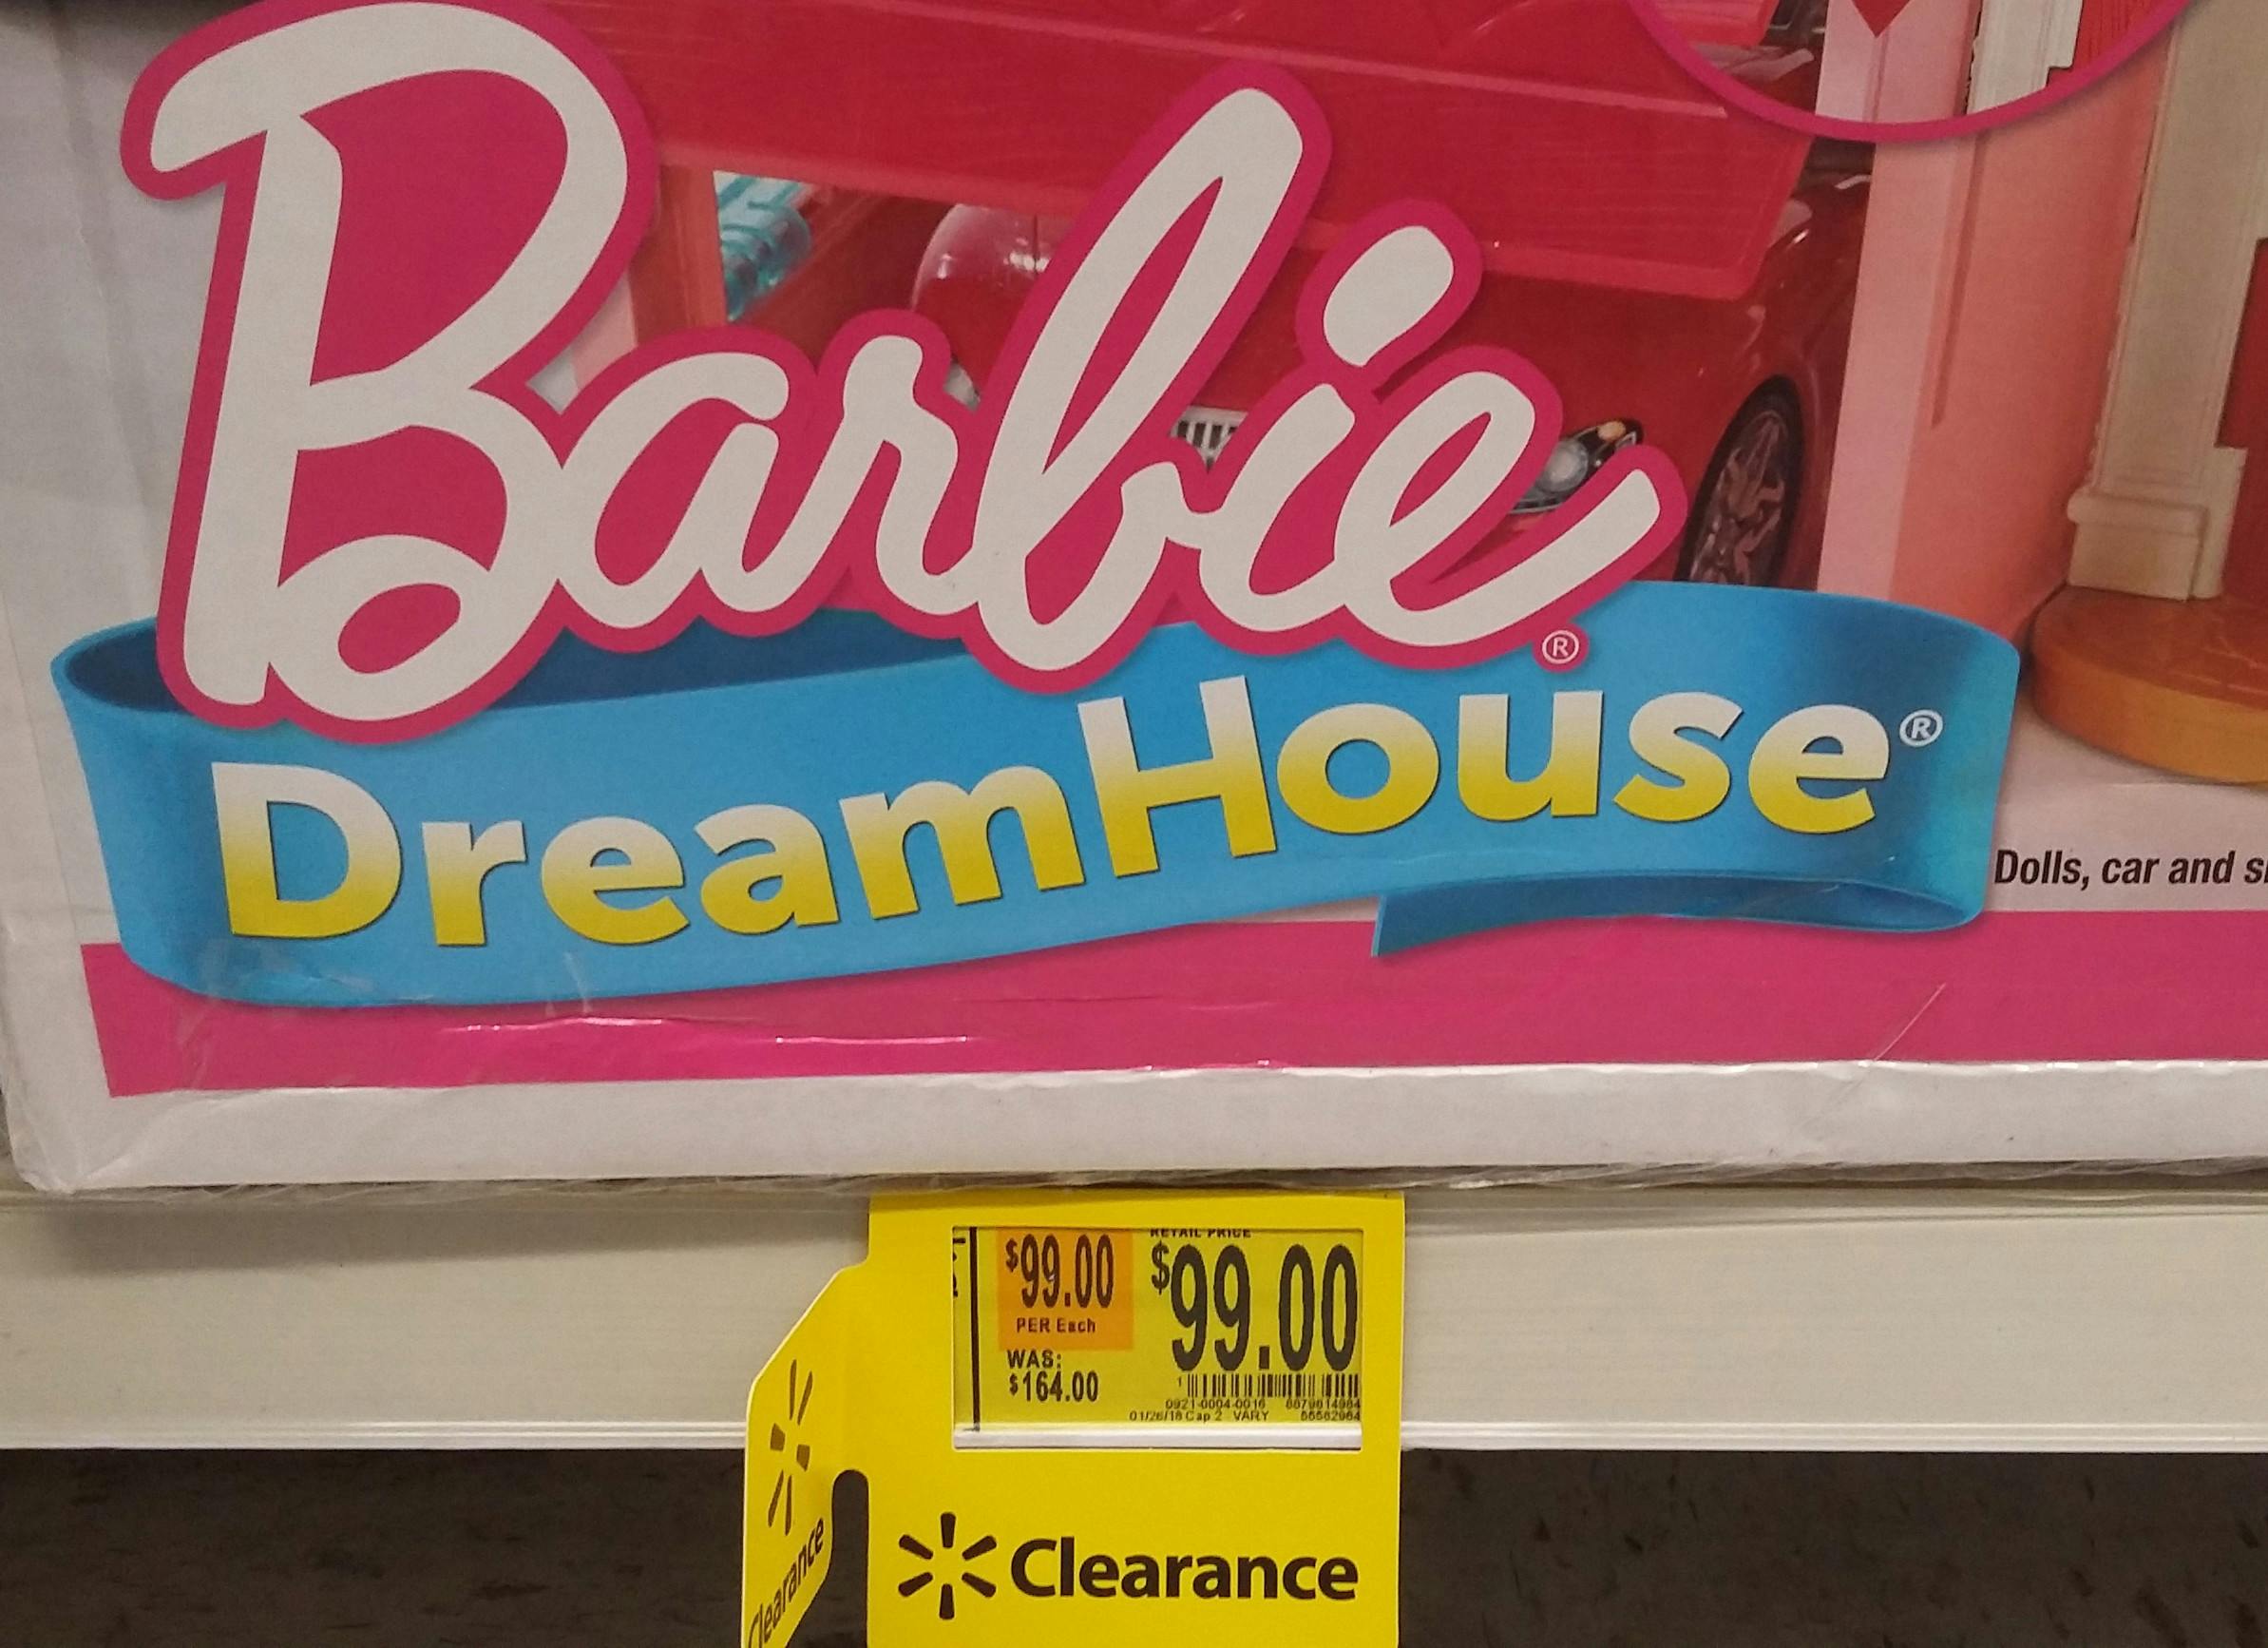 barbie dreamhouse black friday sale 2018